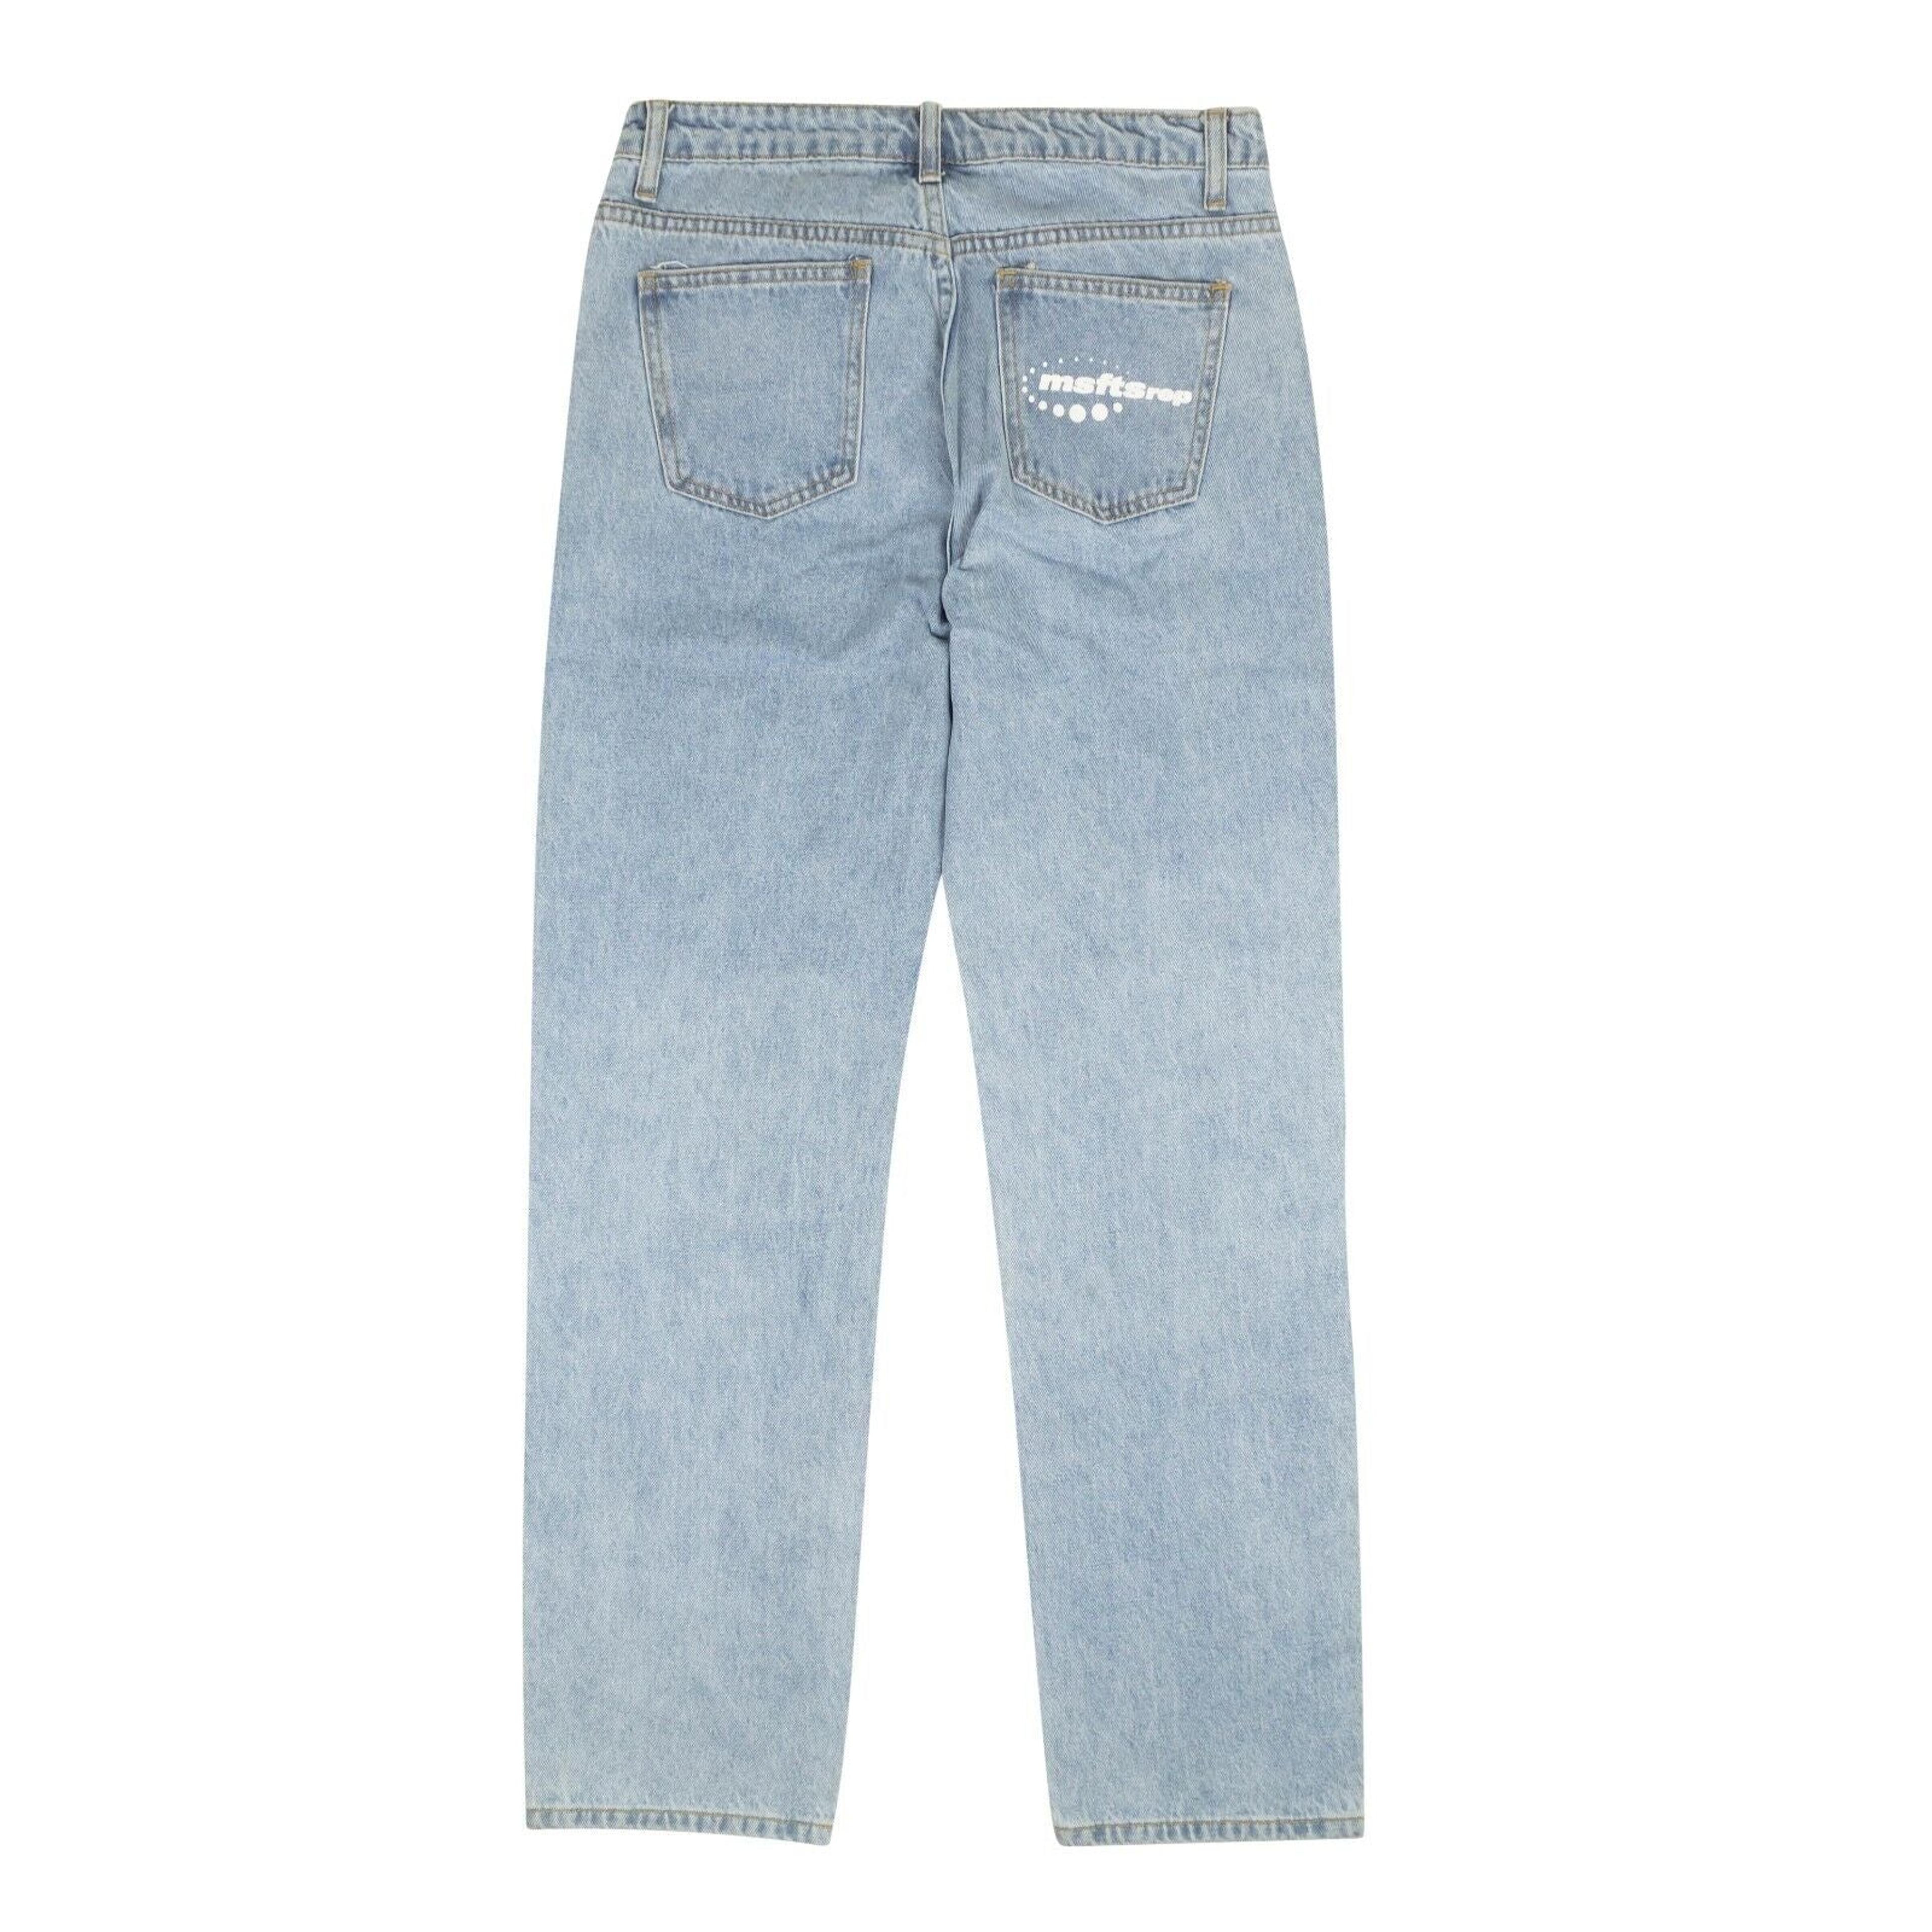 Alternate View 2 of Blue Denim Straight Jeans